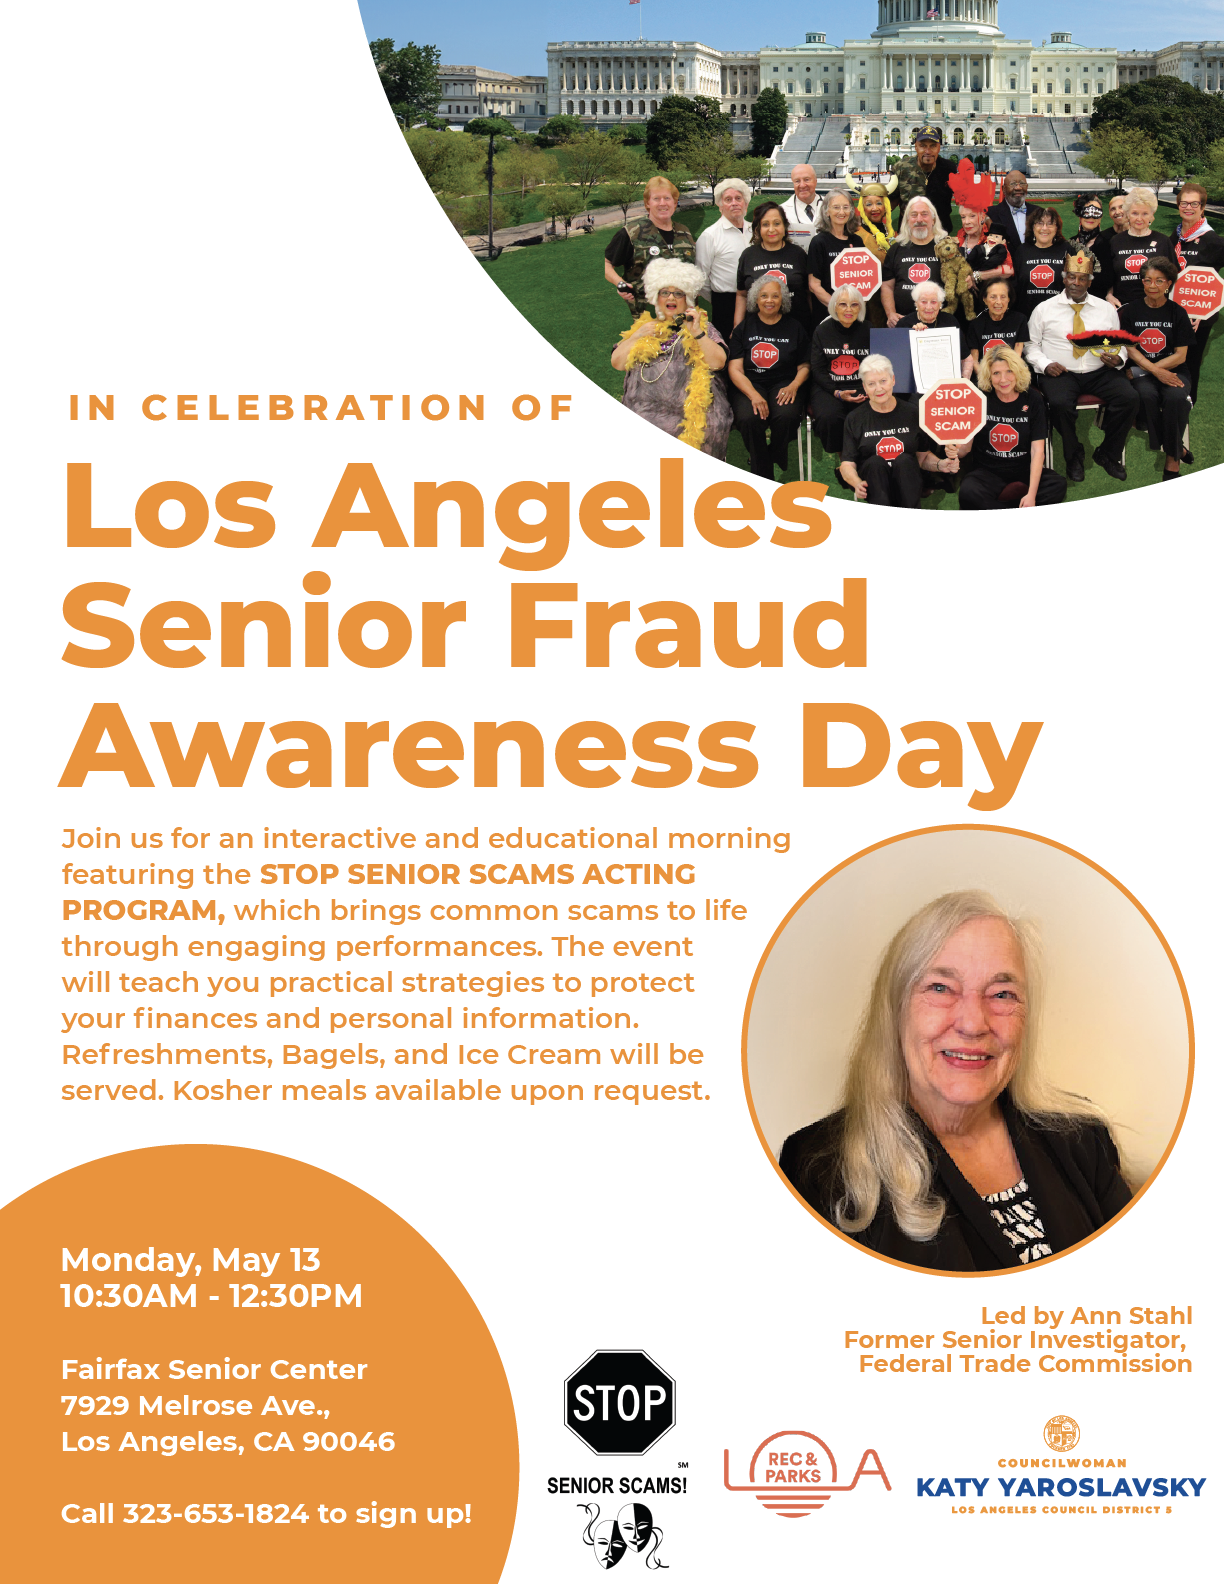 Los Angeles Senior Fraud Awareness Day